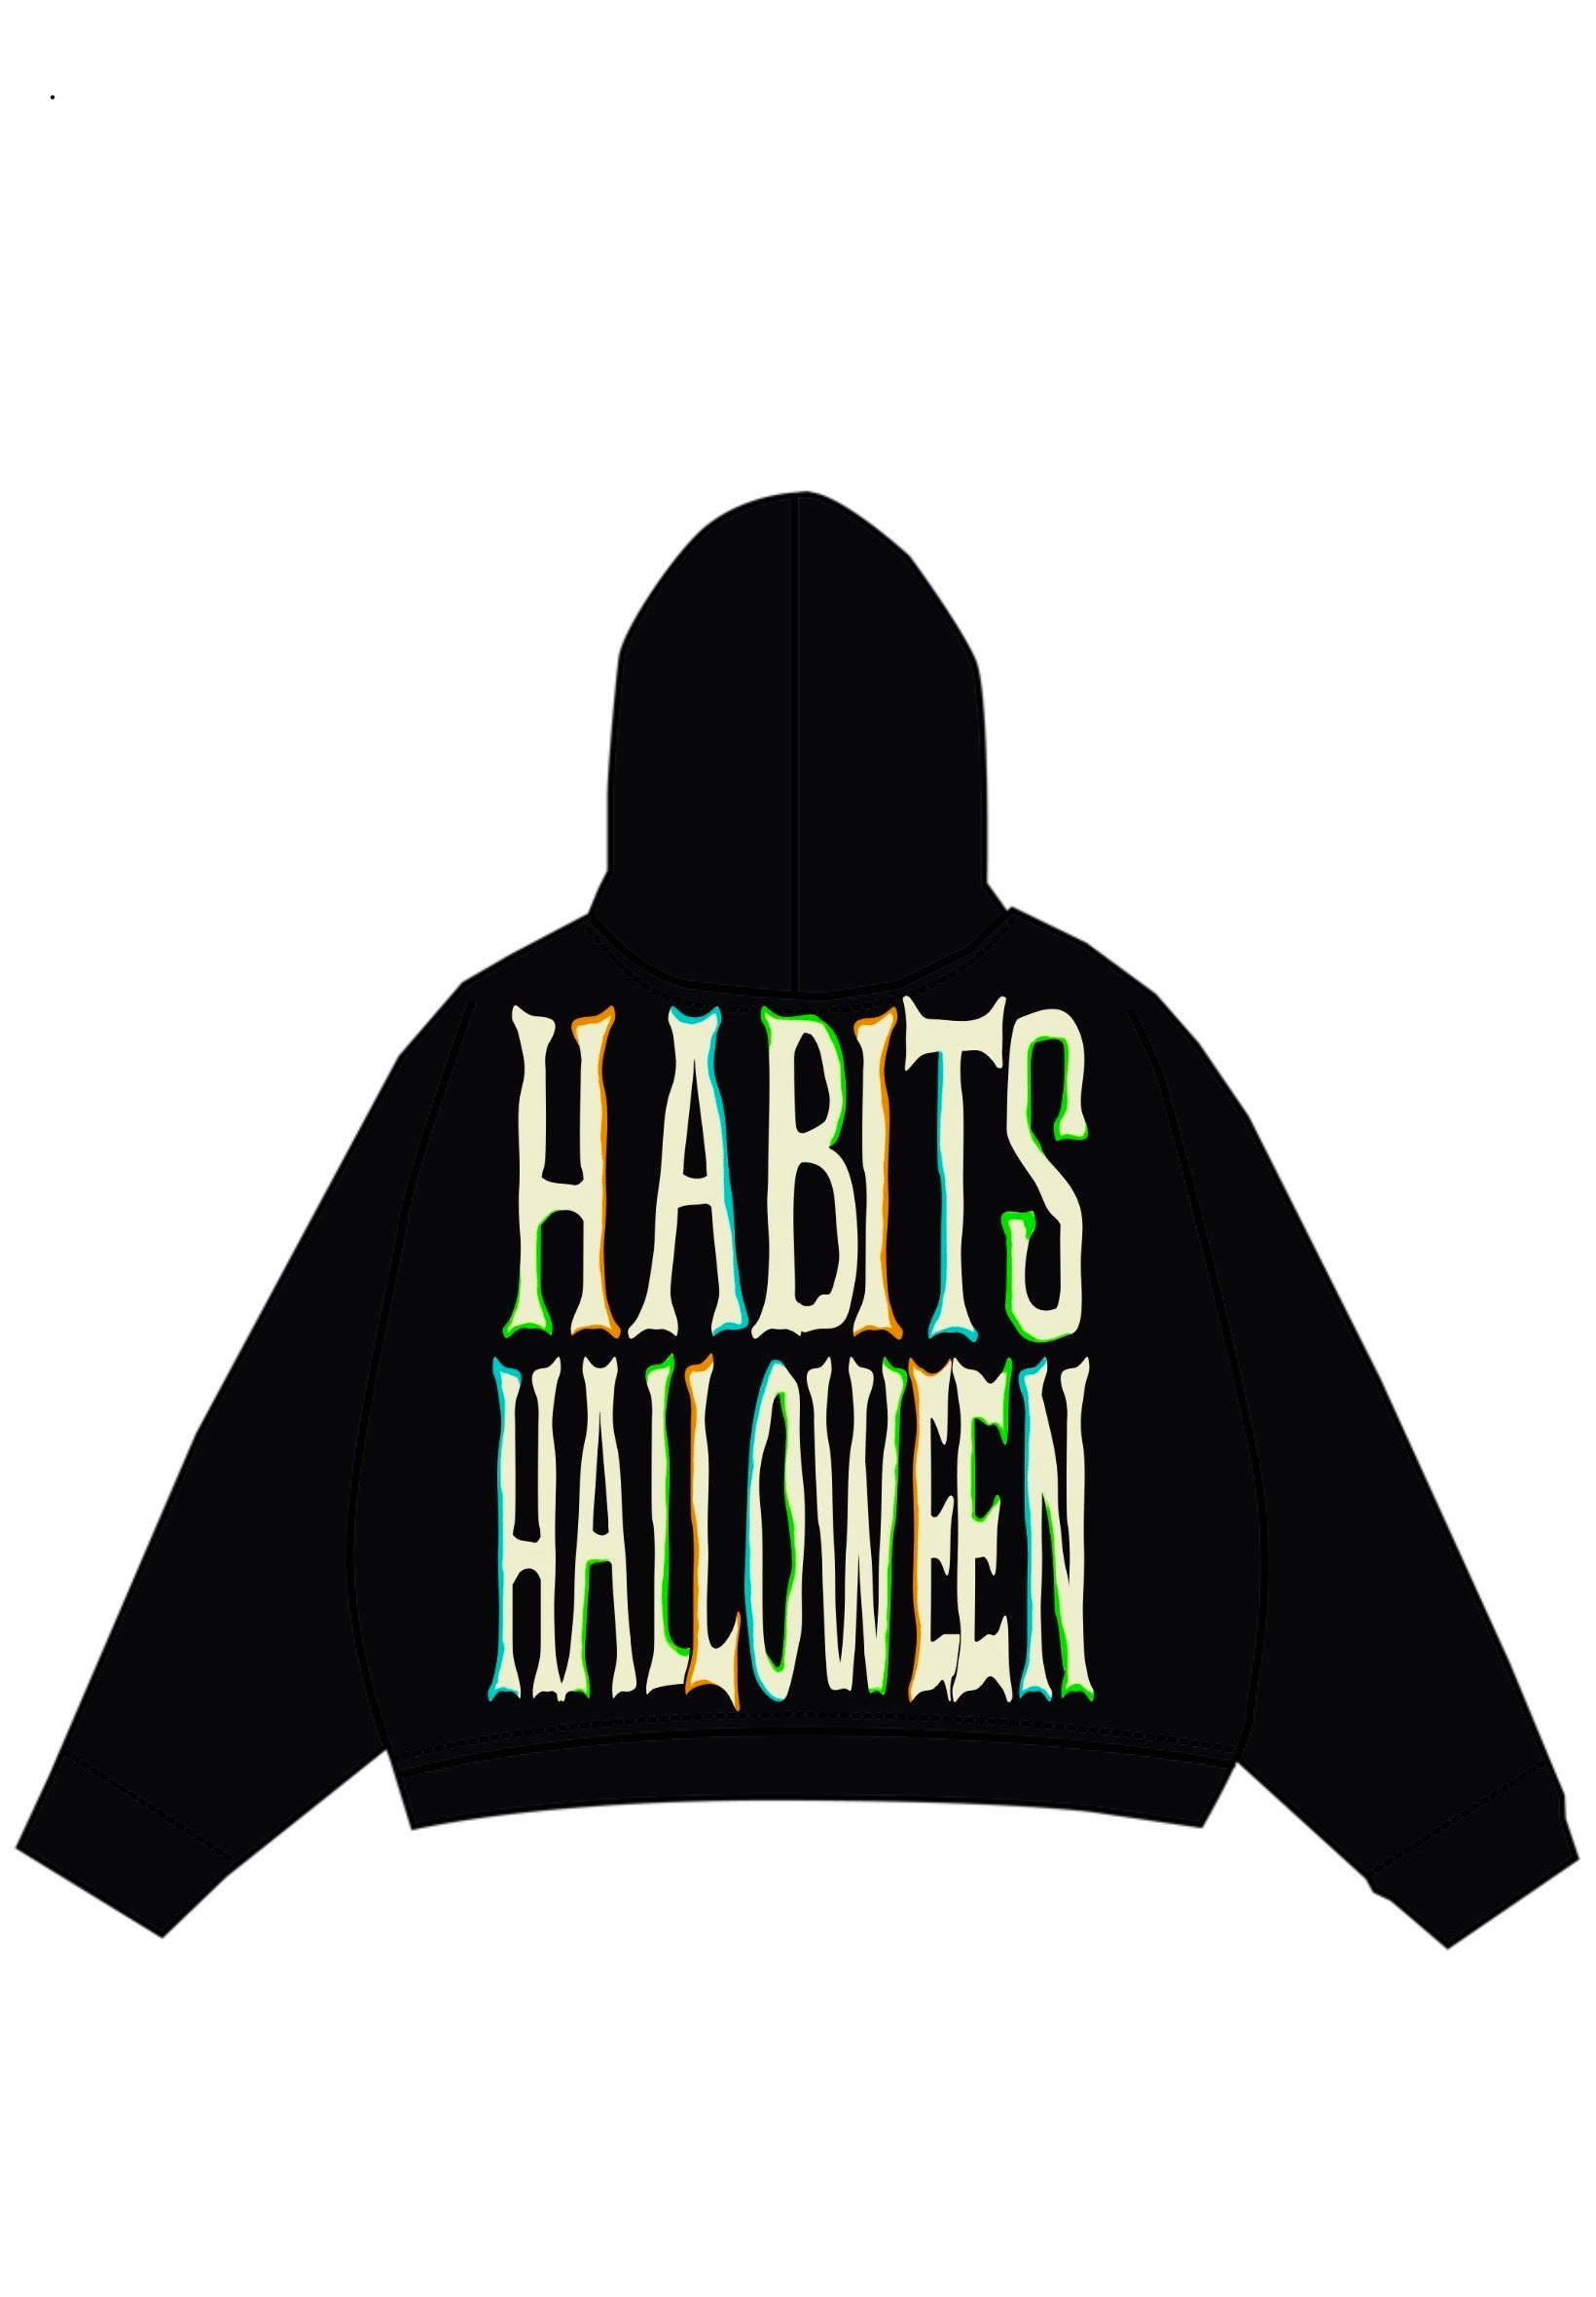 LIMITED EDITION: Habits Halloween "Bones" Hoodie